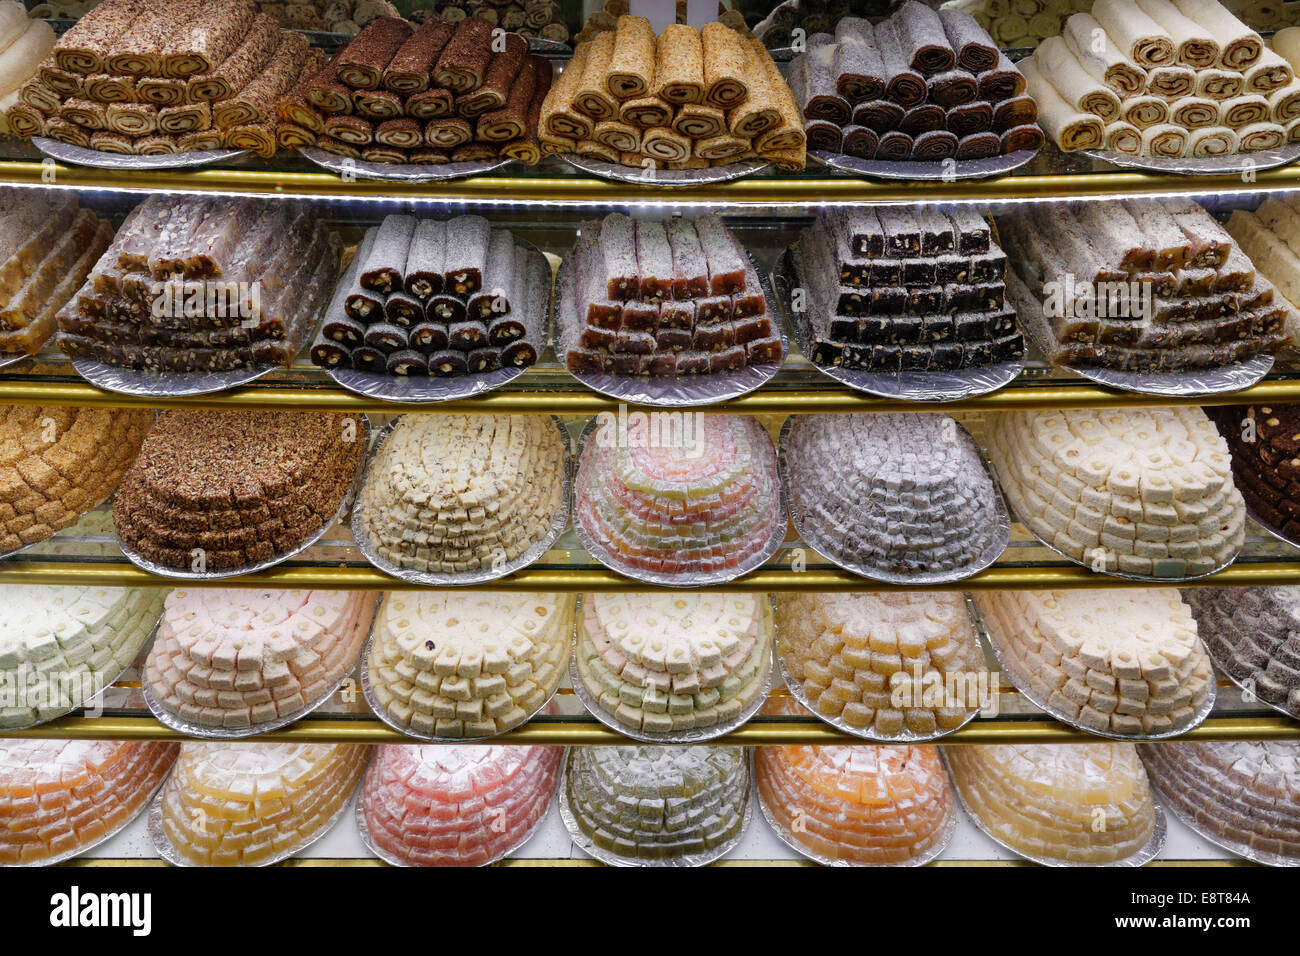 Turkish delight or Lokum and other sweets on display, Fethiye, Muğla Province, Aegean, Turkey Stock Photo